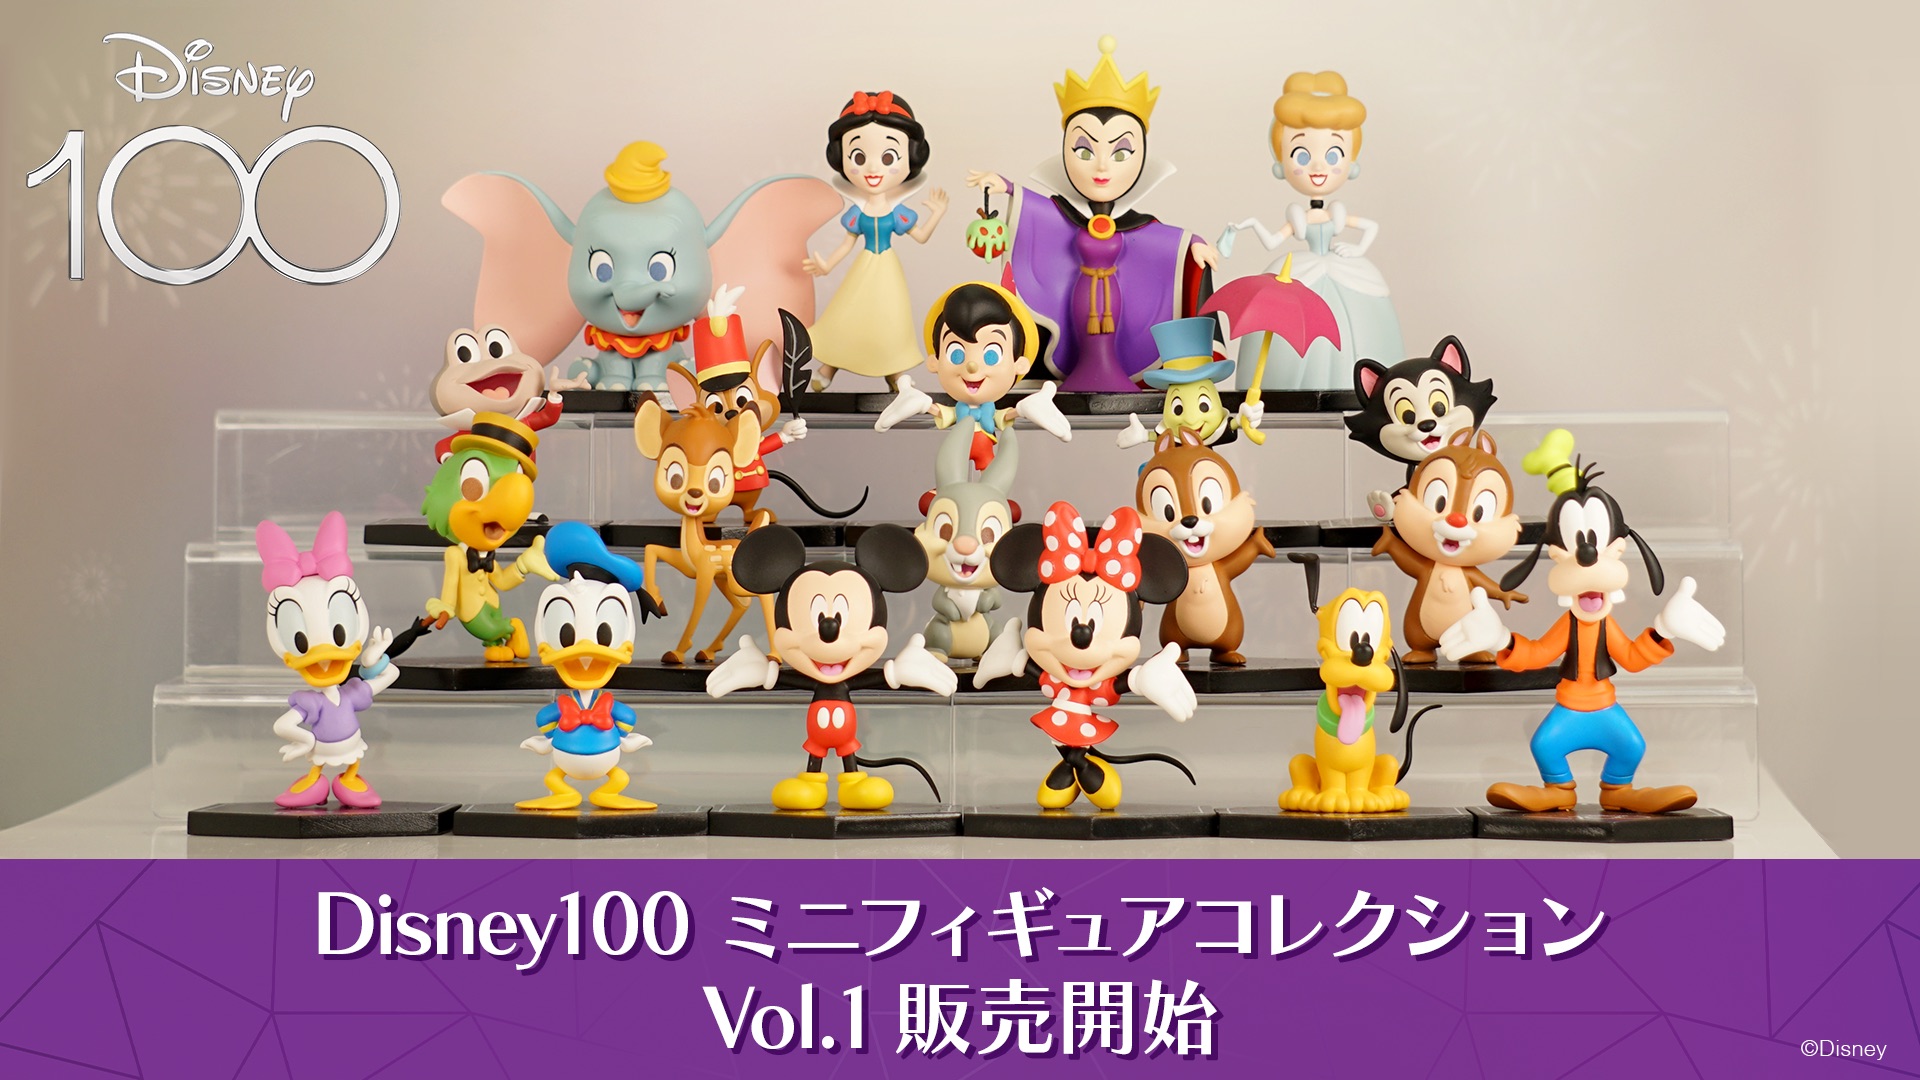 Disney100 ミニフィギュアコレクション Vol.1」の一般販売がファミマに